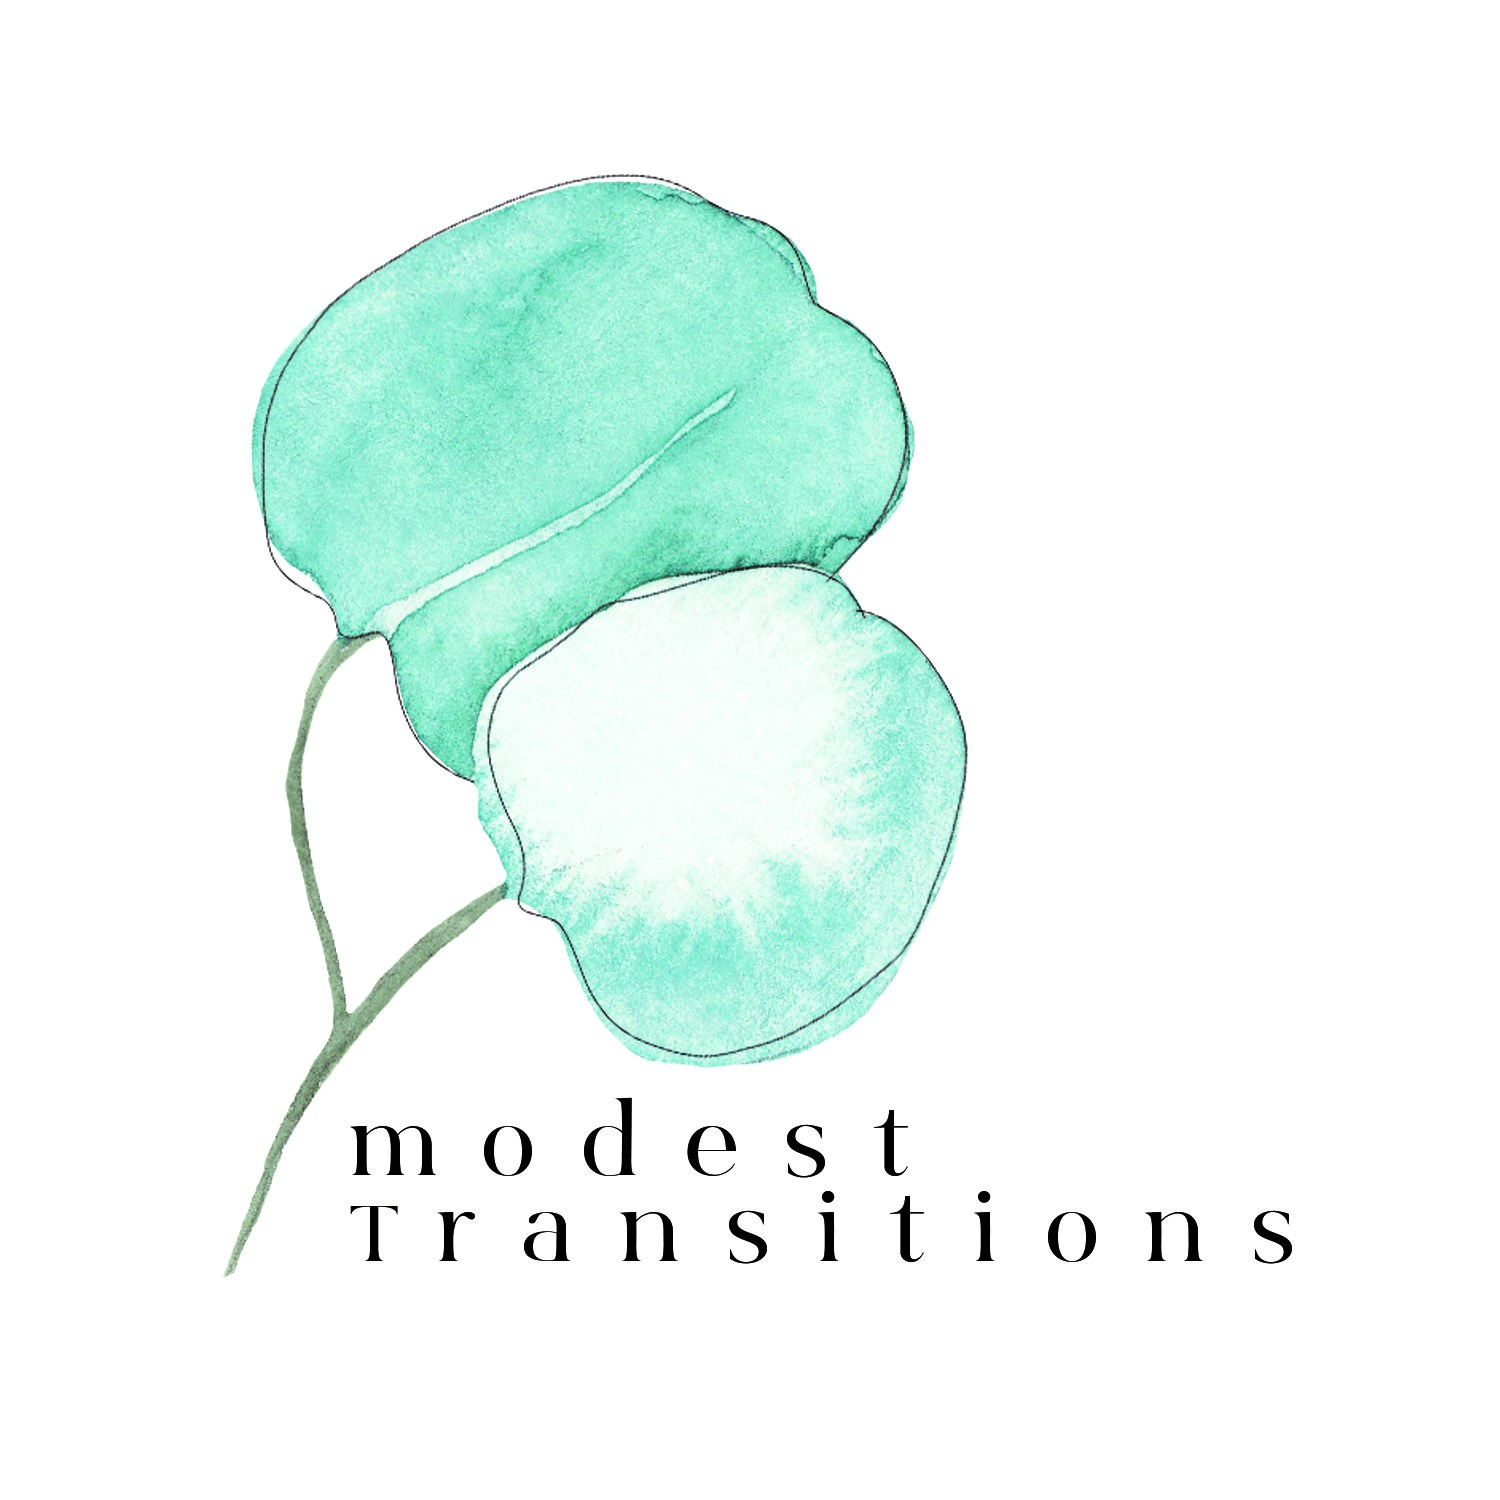 Modest Transitions logo.